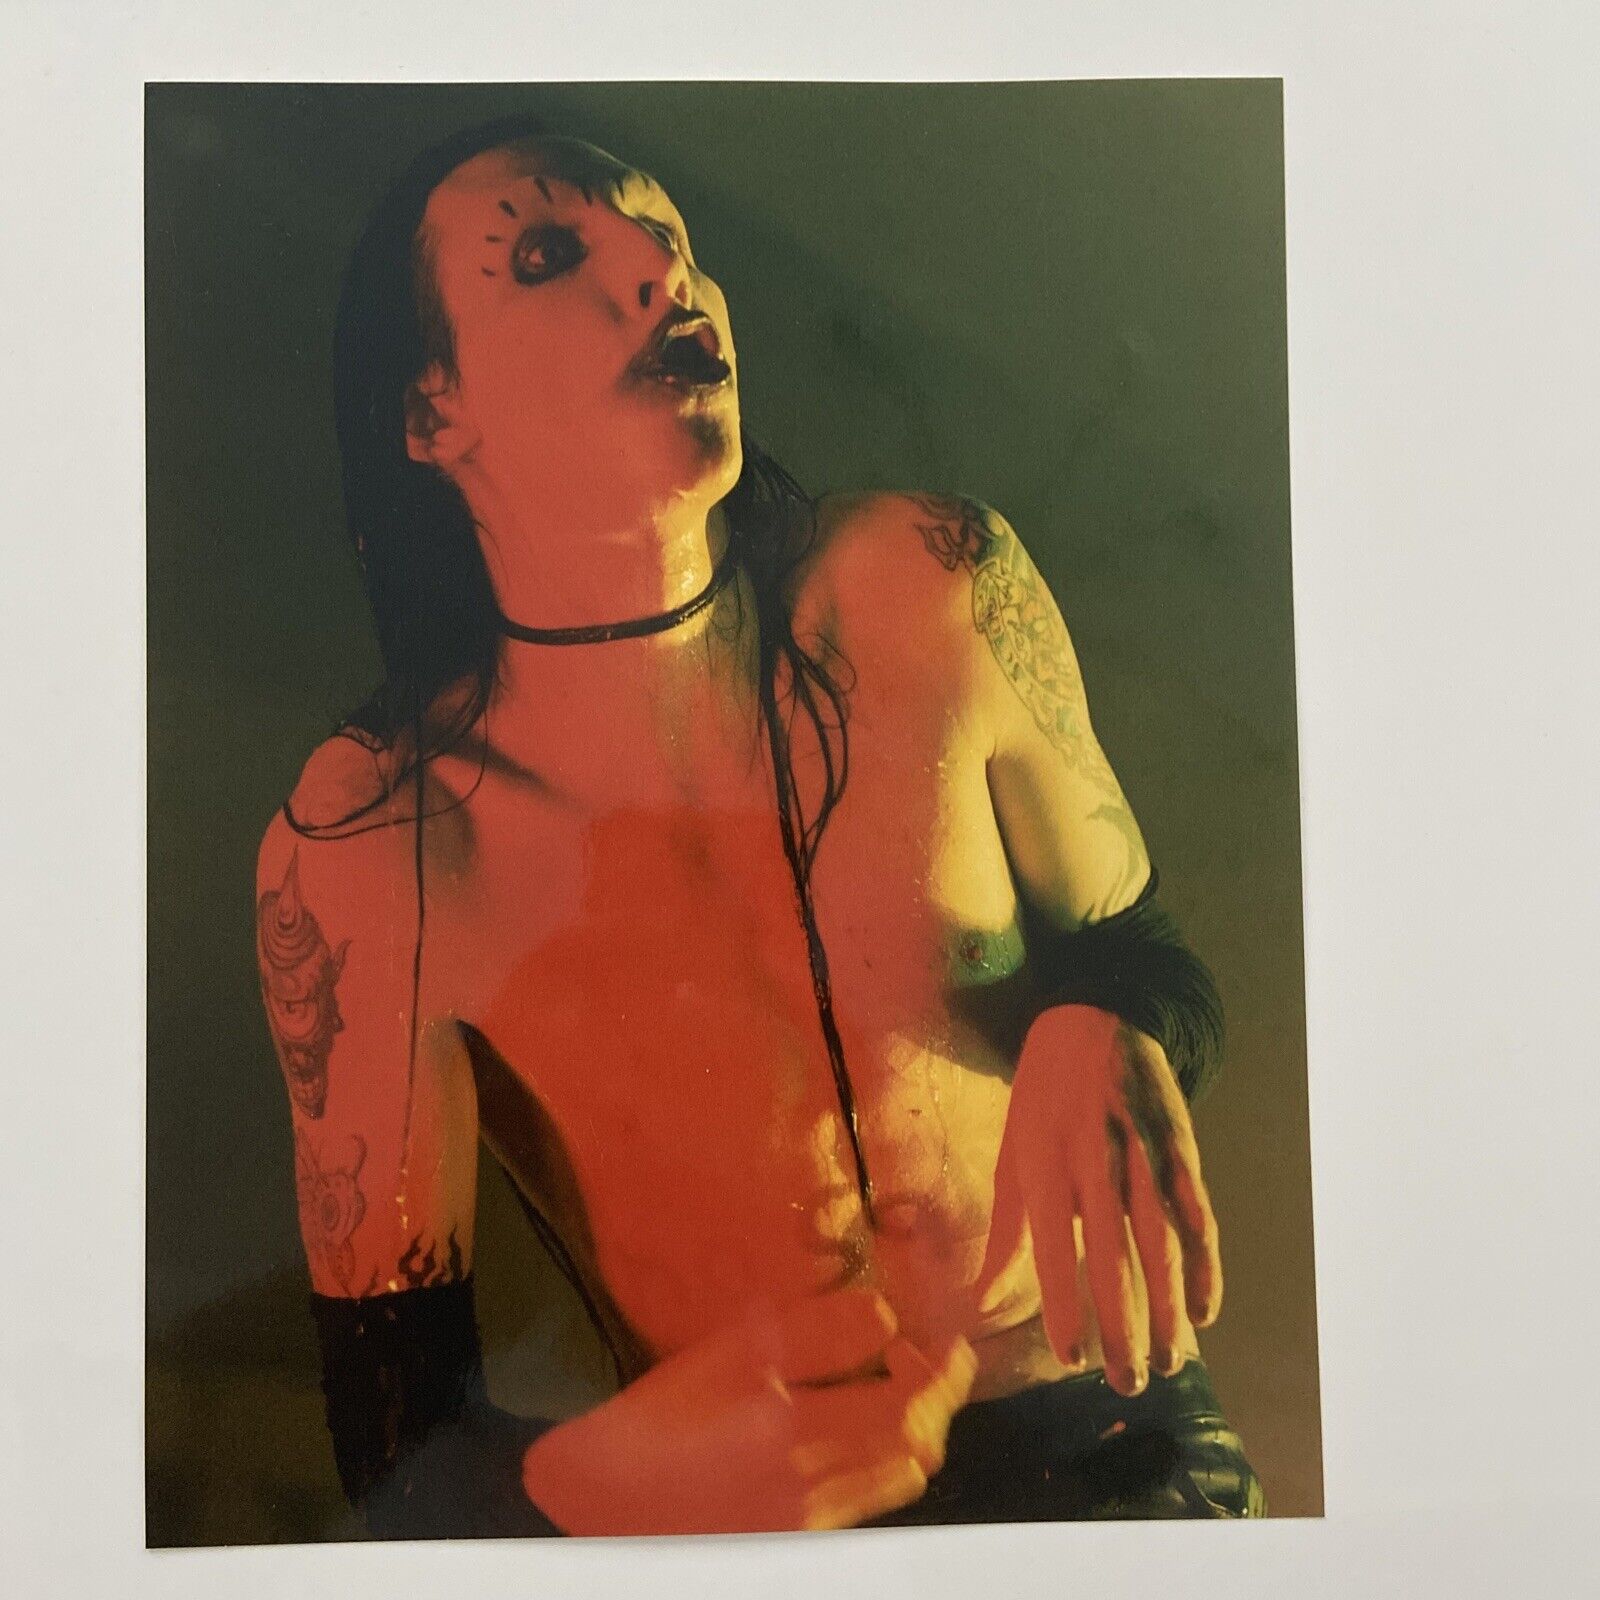 Marilyn Manson 8x10 Photo